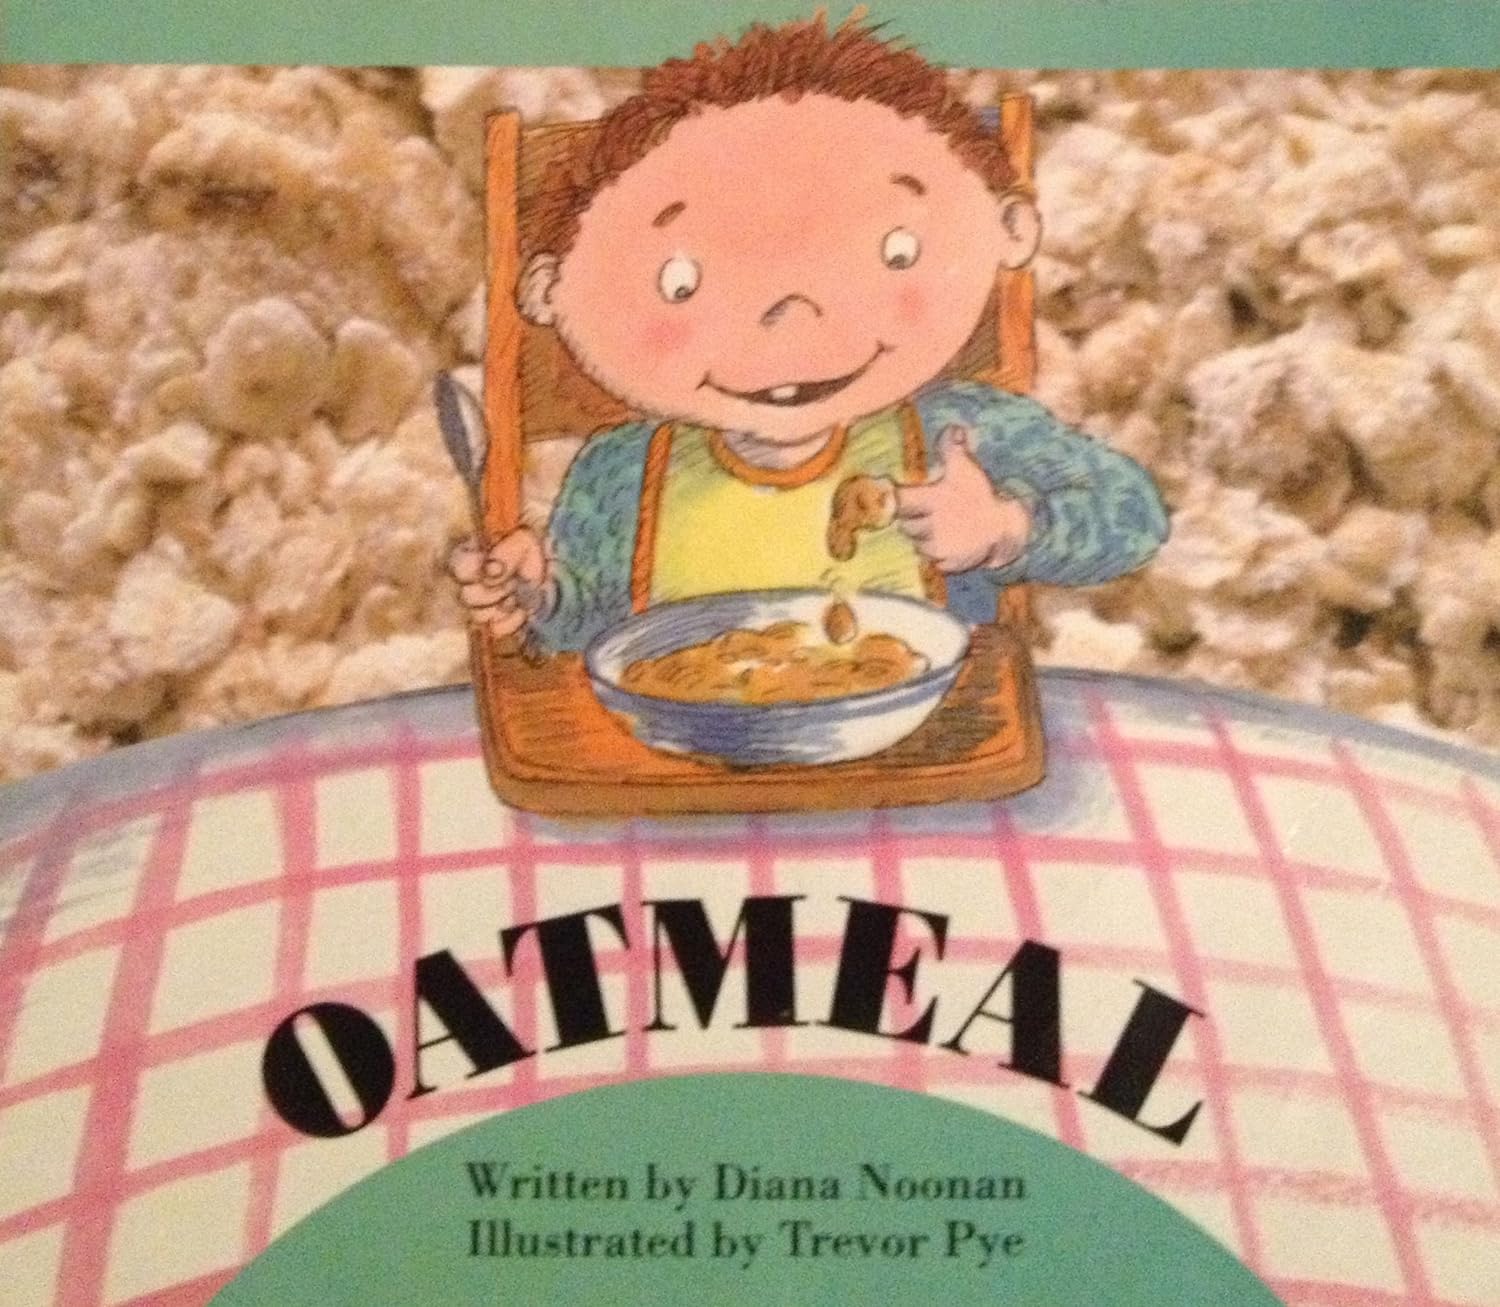 Oatmeal by Diana Noonan